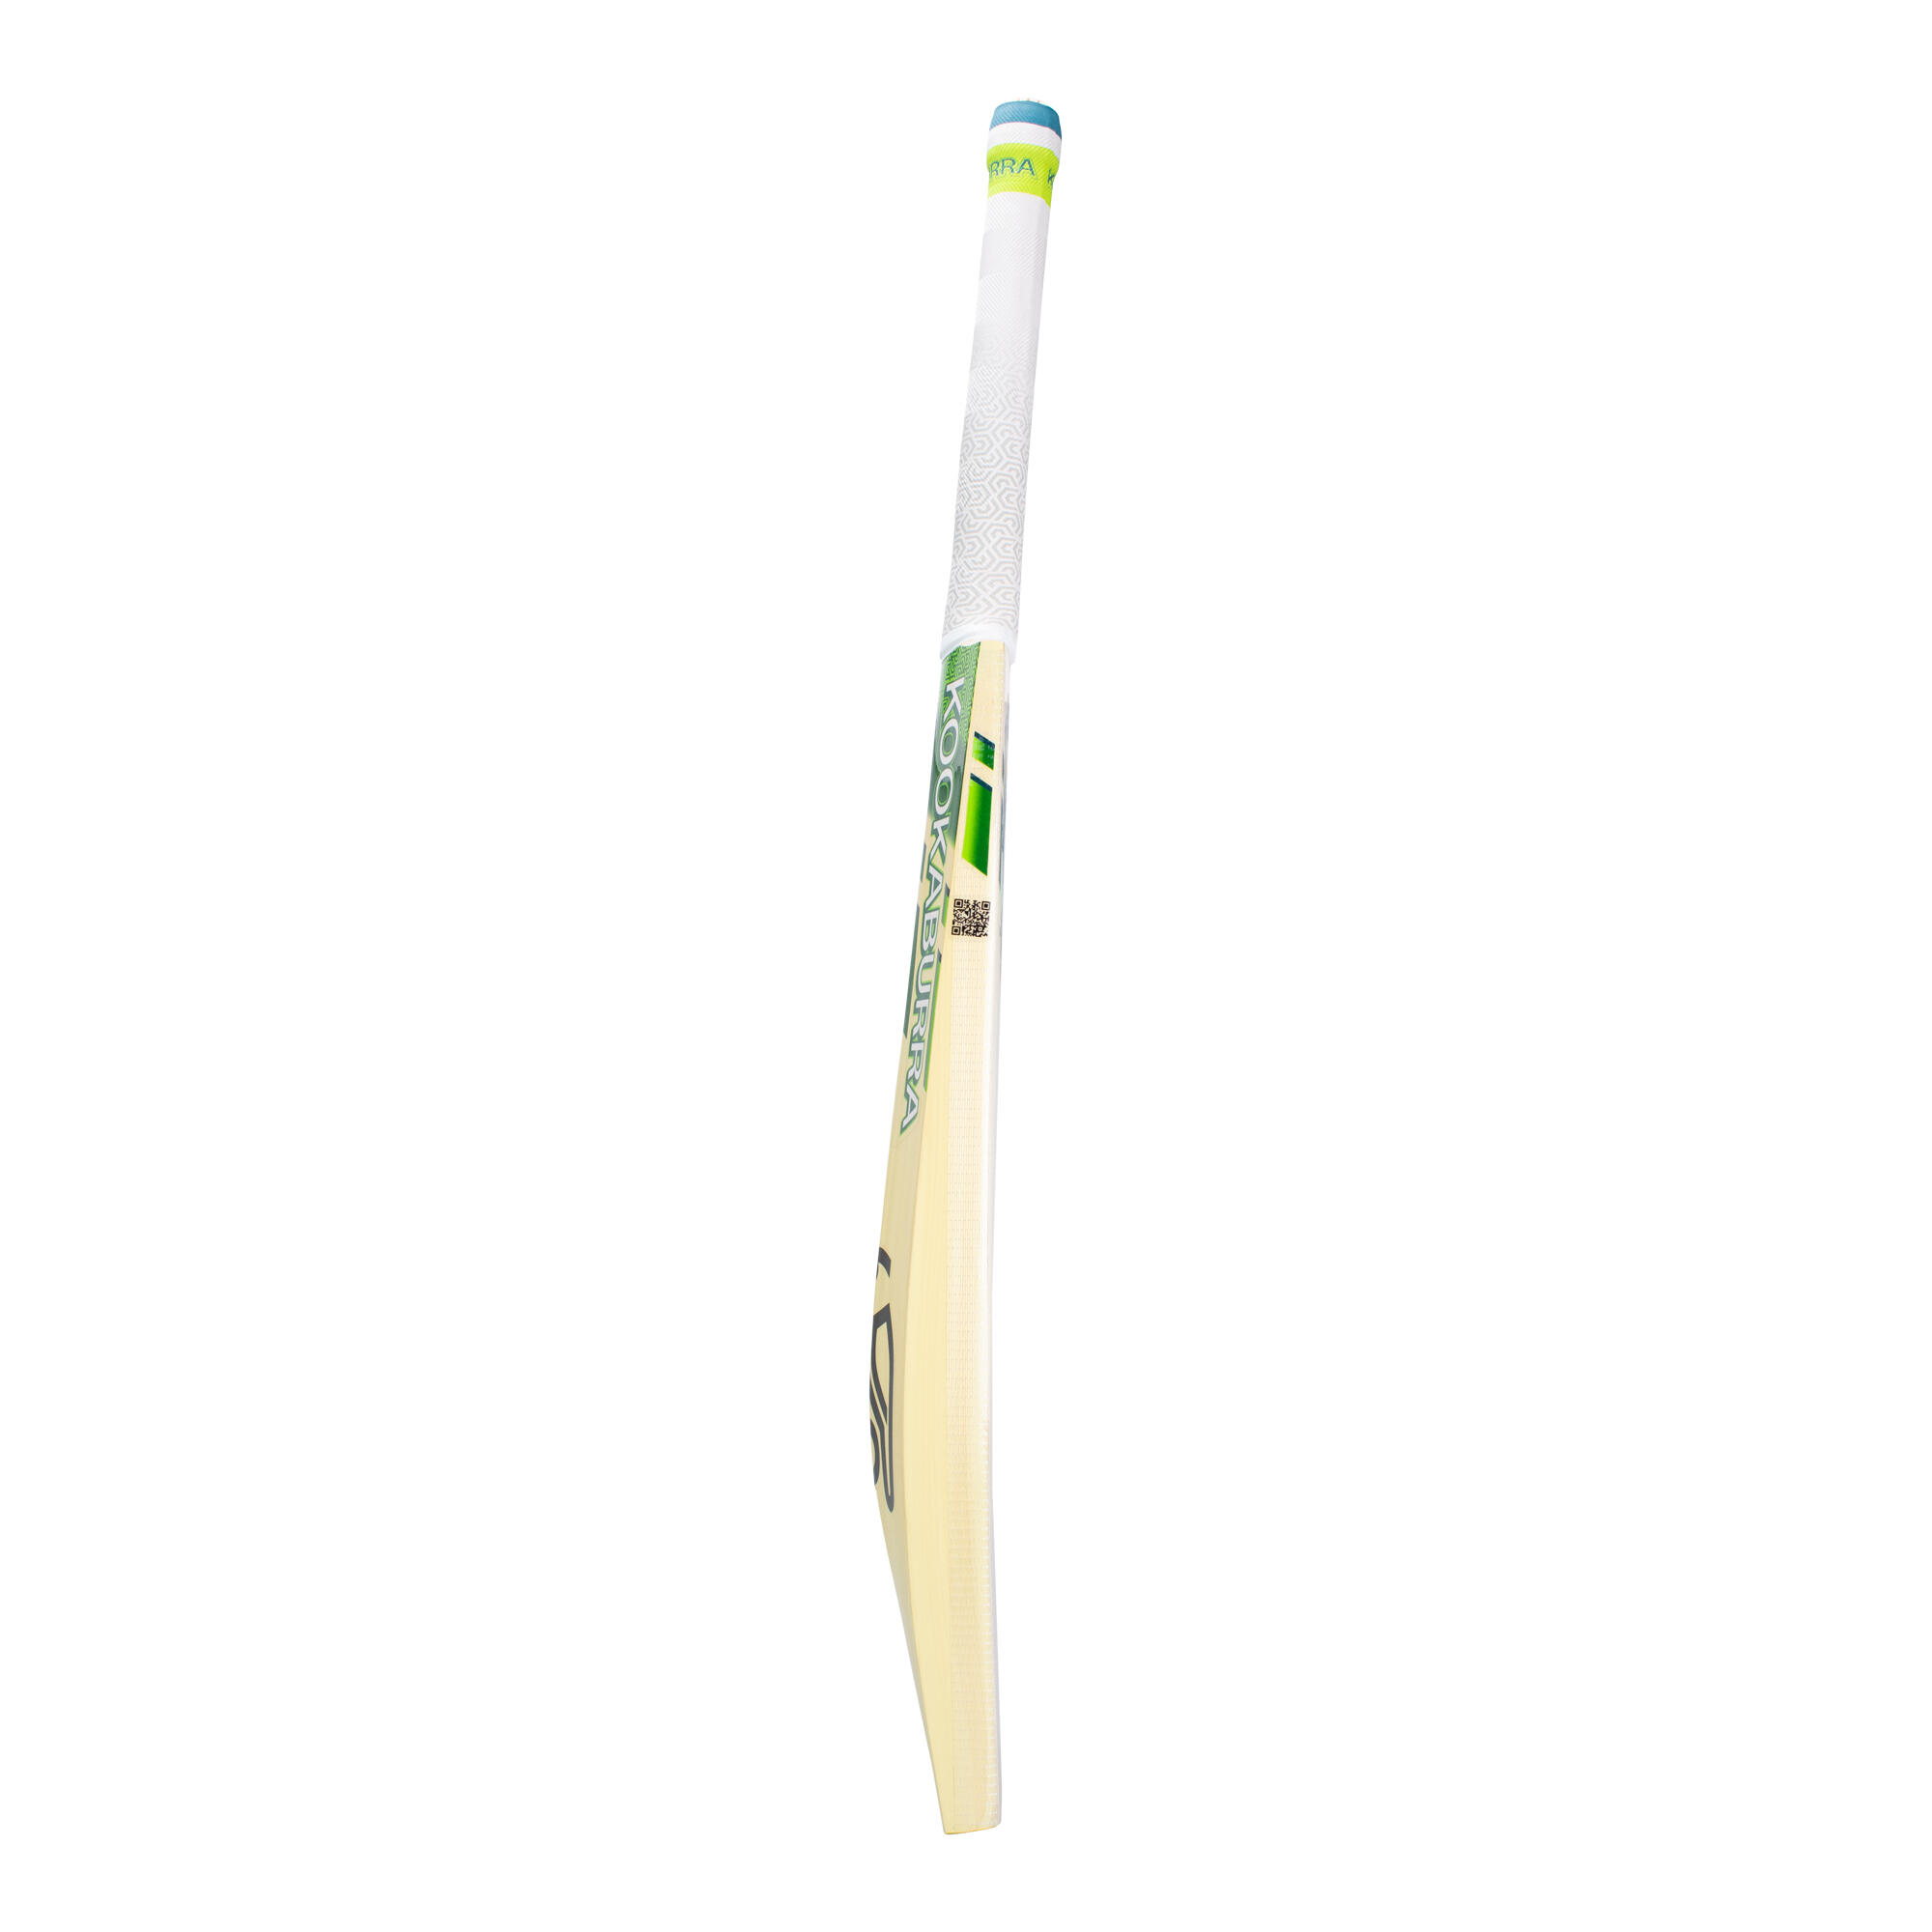 Kookaburra Kahuna 9.1 Kashmir Willow Cricket Bat sizes Harrow and Short Handle 6/6